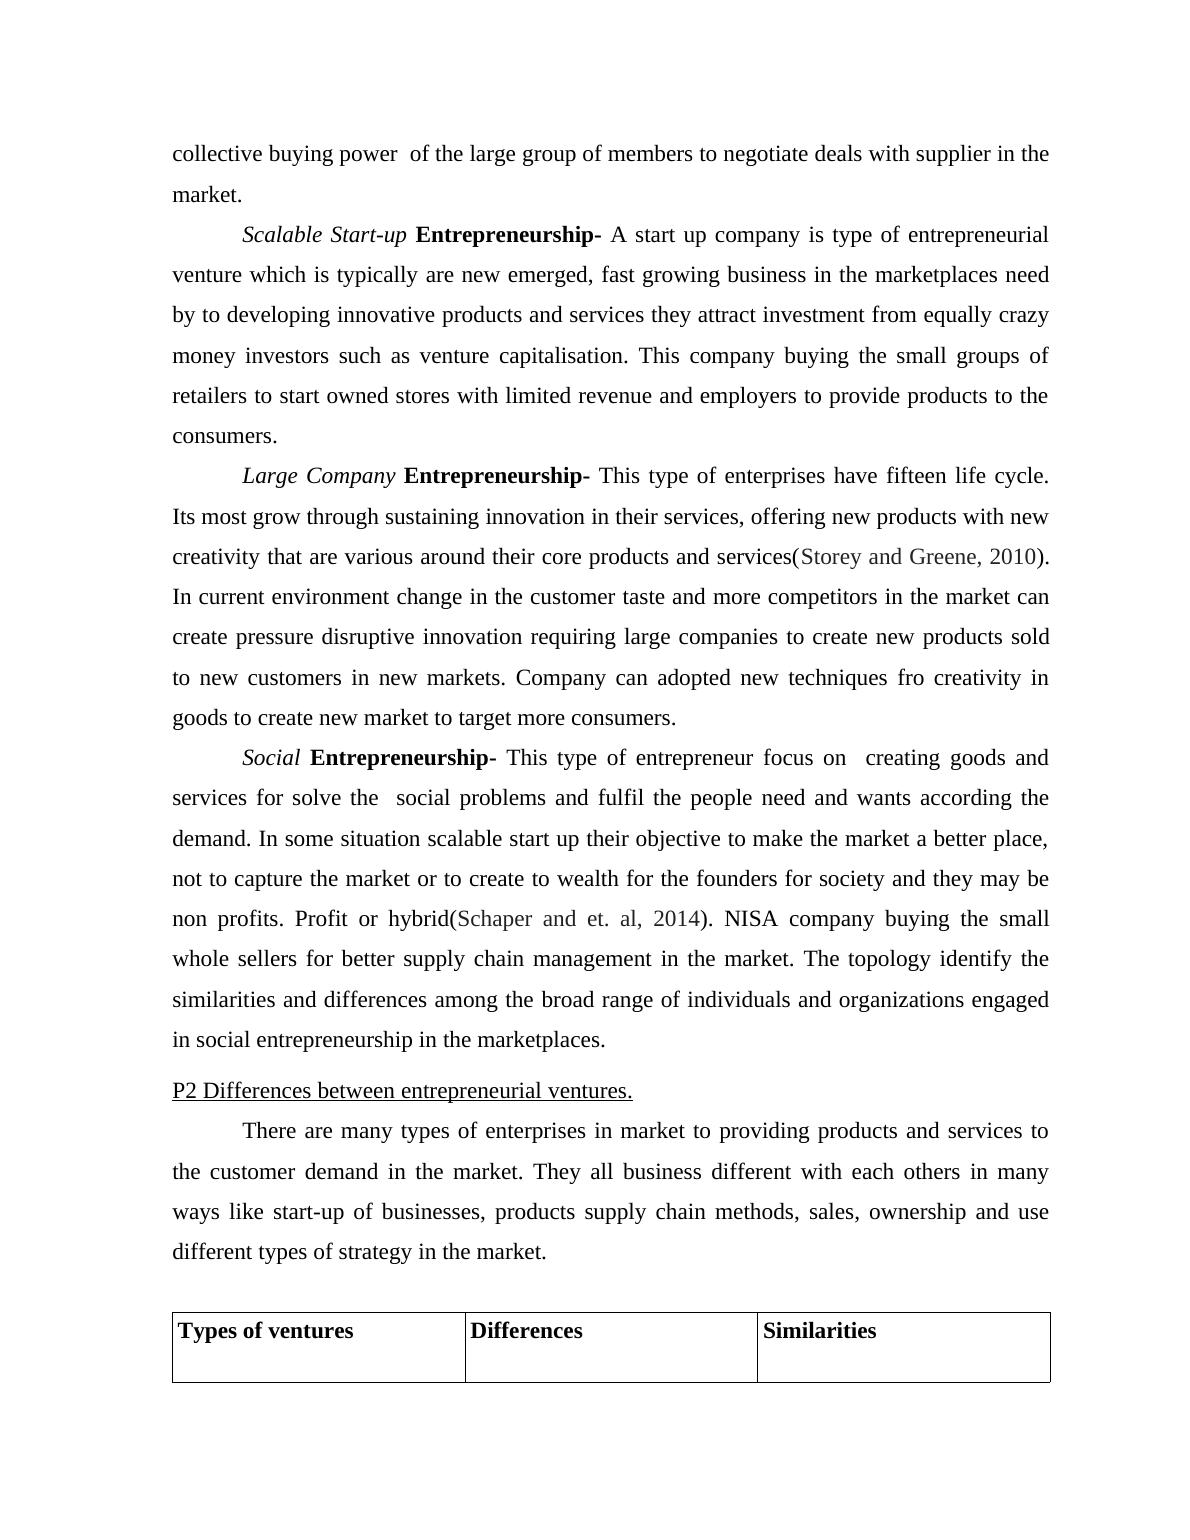 NISA Retail Company - Entrepreneurial Ideas | Report_4